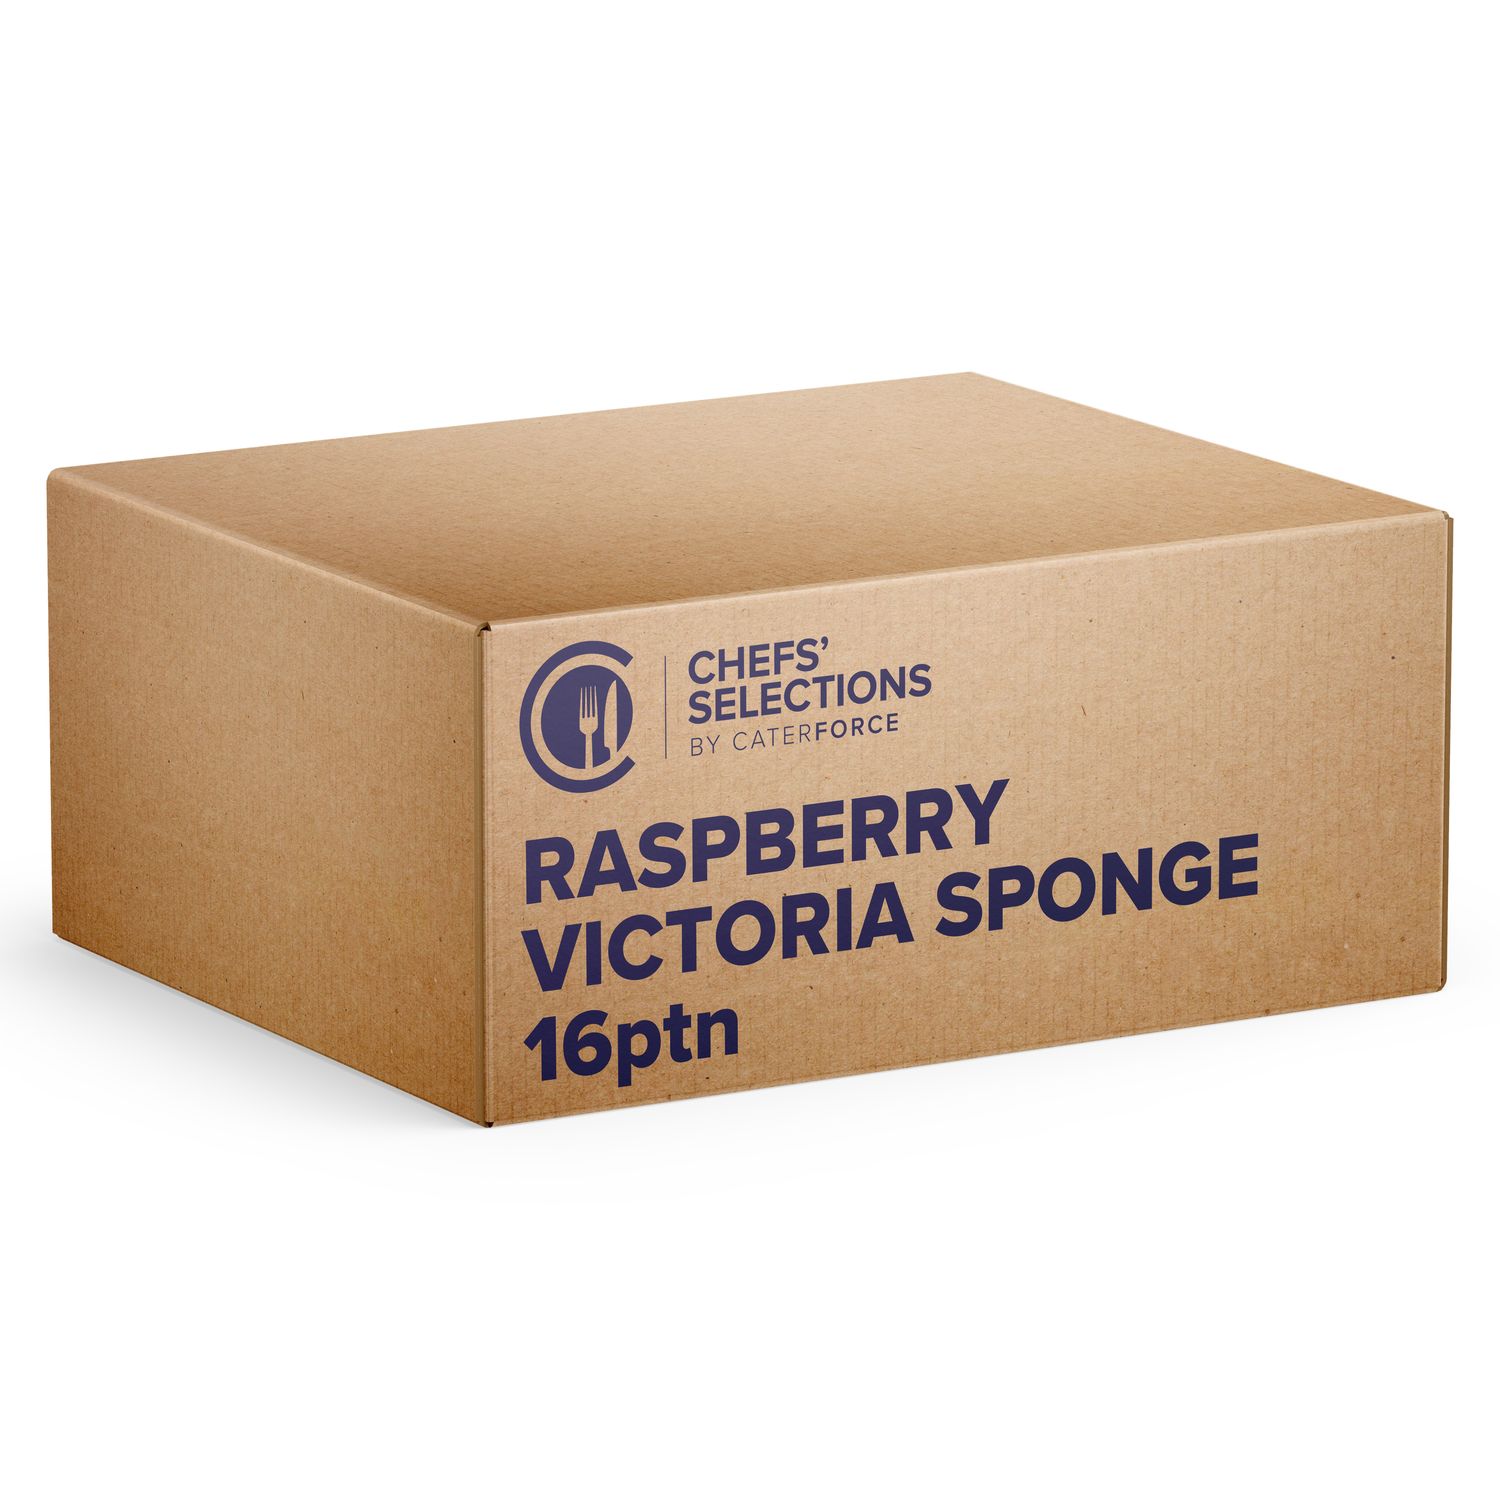 Chefs’ Selections Raspberry Victoria Sponge (1x16pptn)